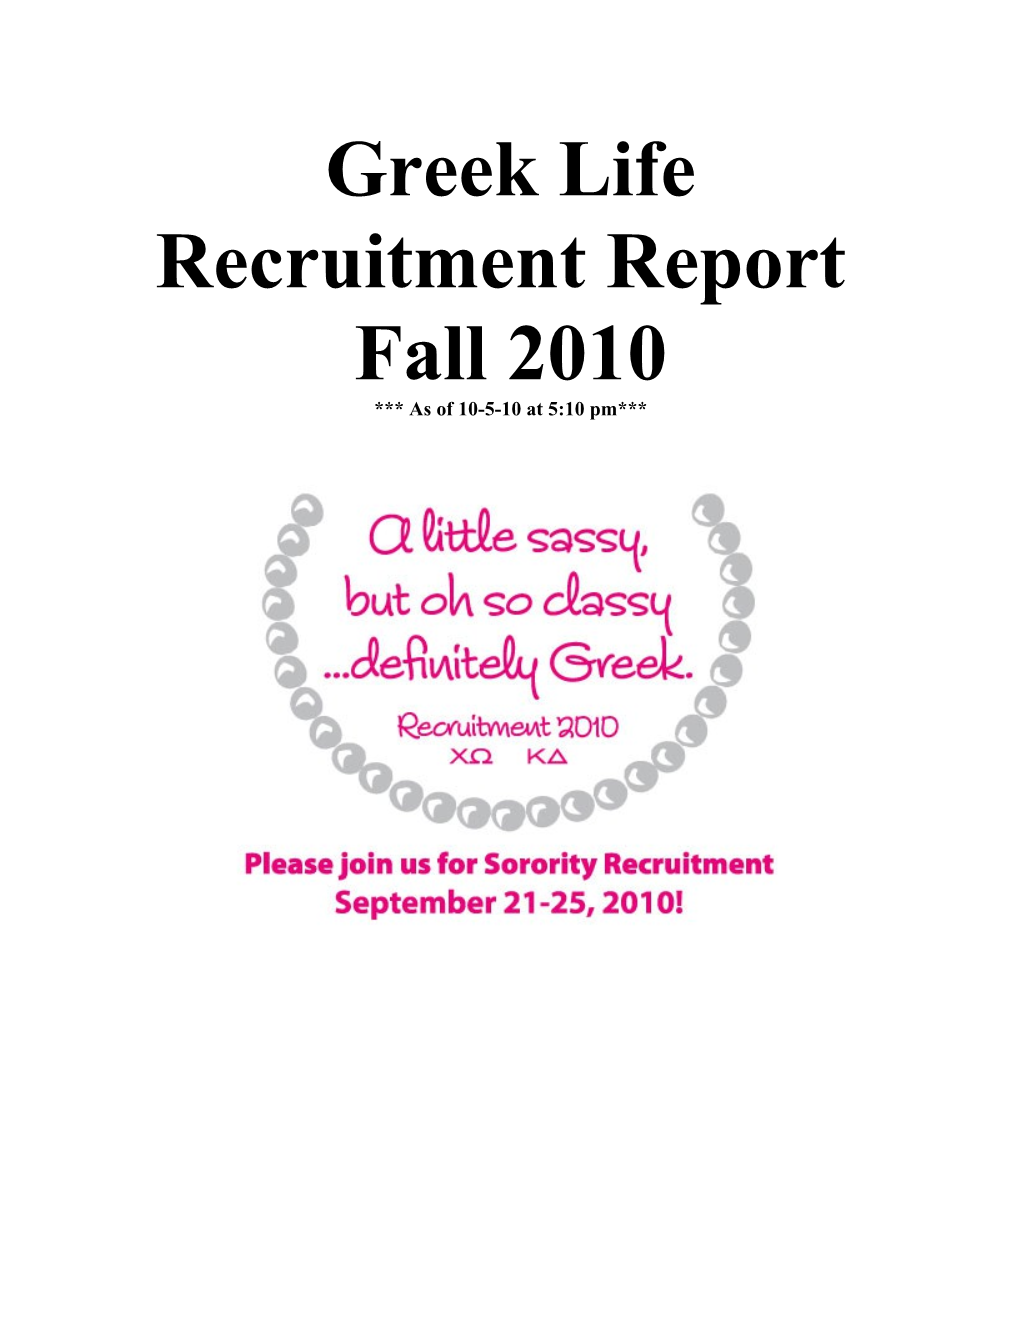 Greek Life Recruitment Report